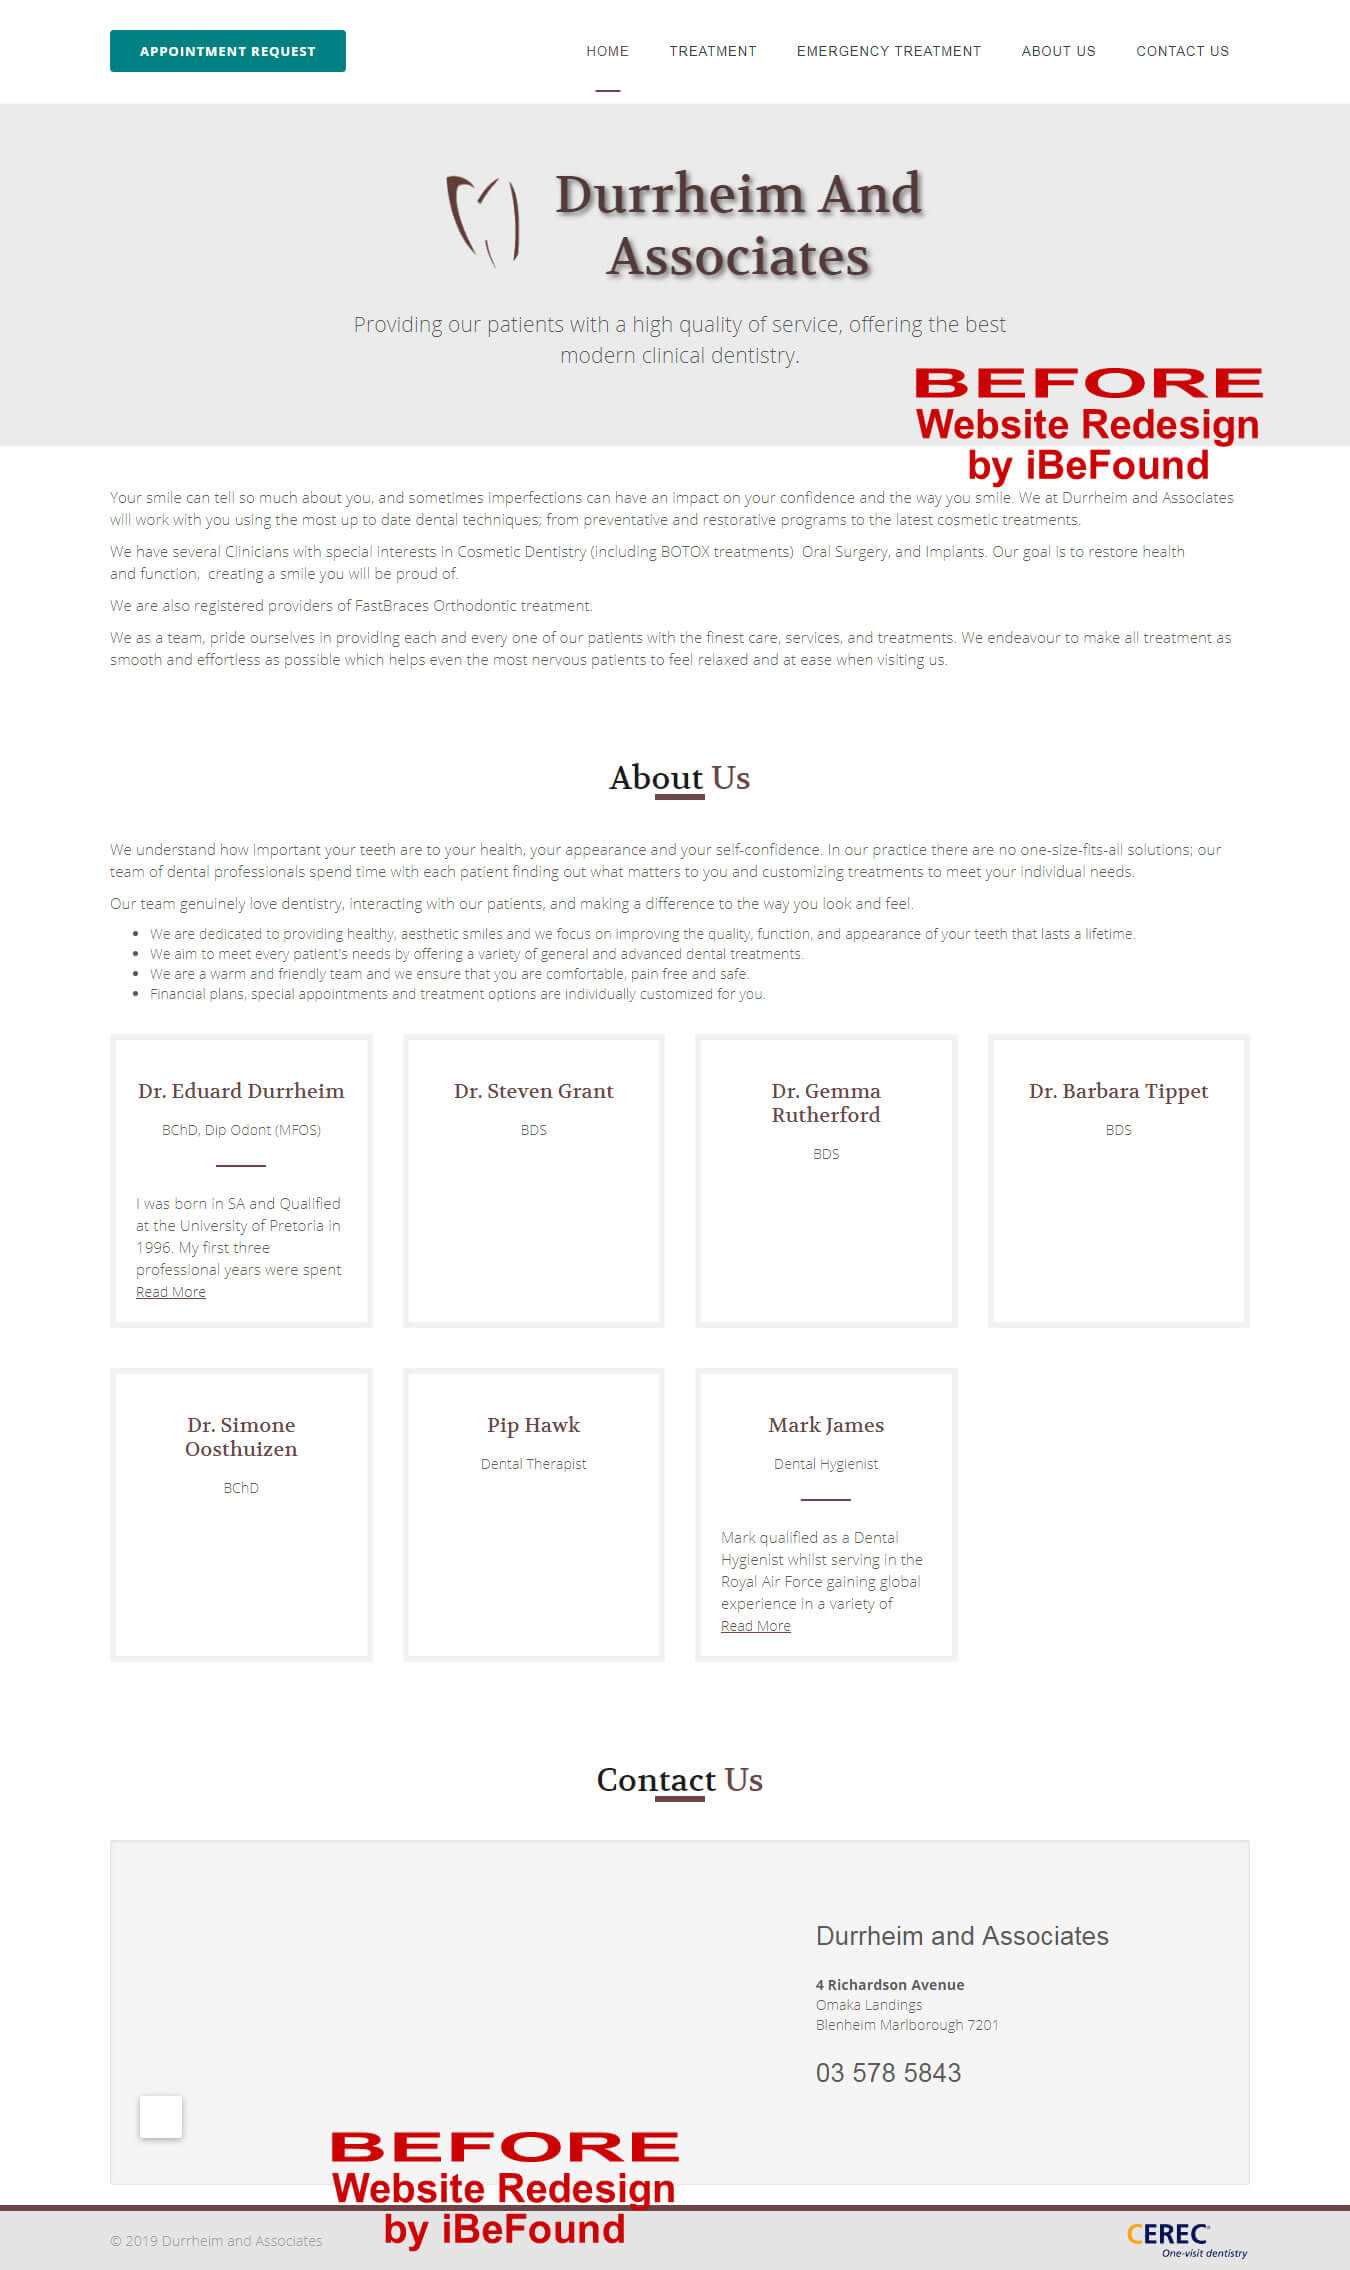 Homepage Of Durrheim And Associates Before Website Redesign By iBeFound Digital Marketing